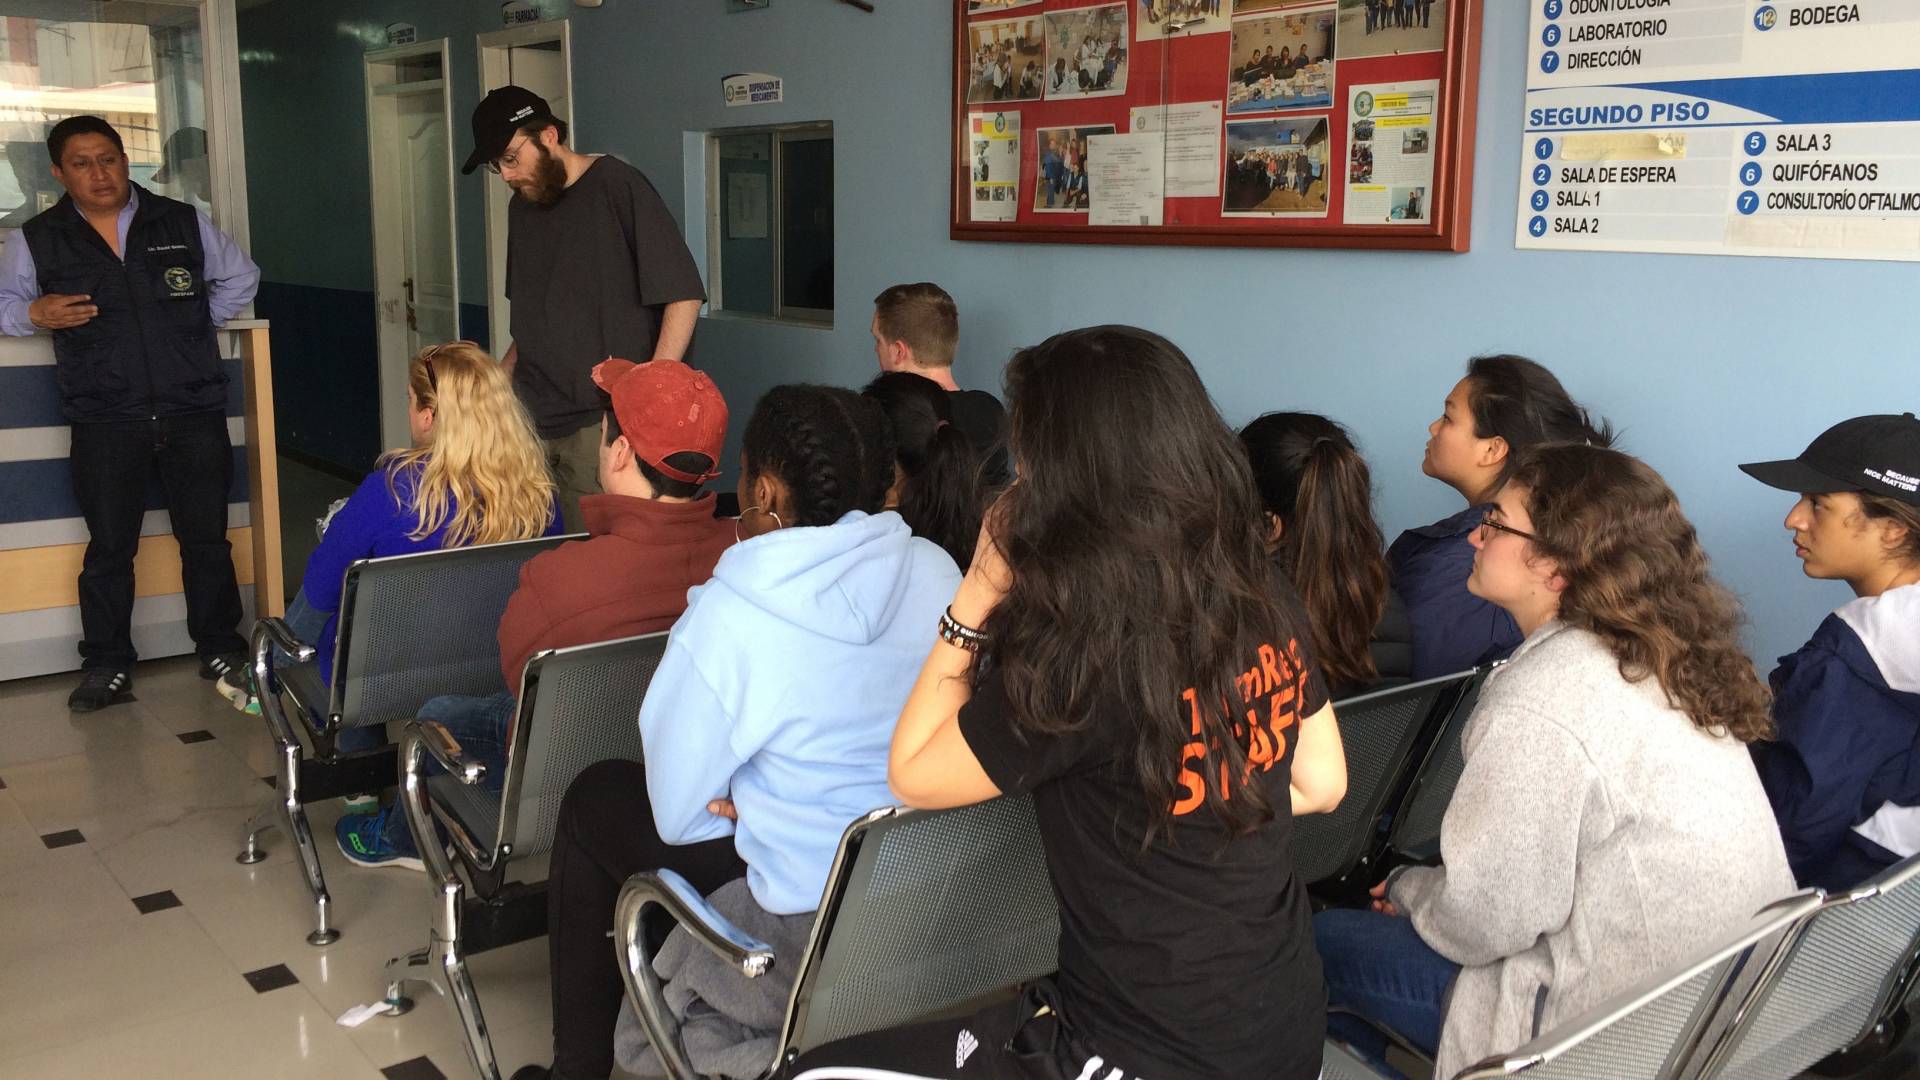 Students listening to speaker in Ecuador